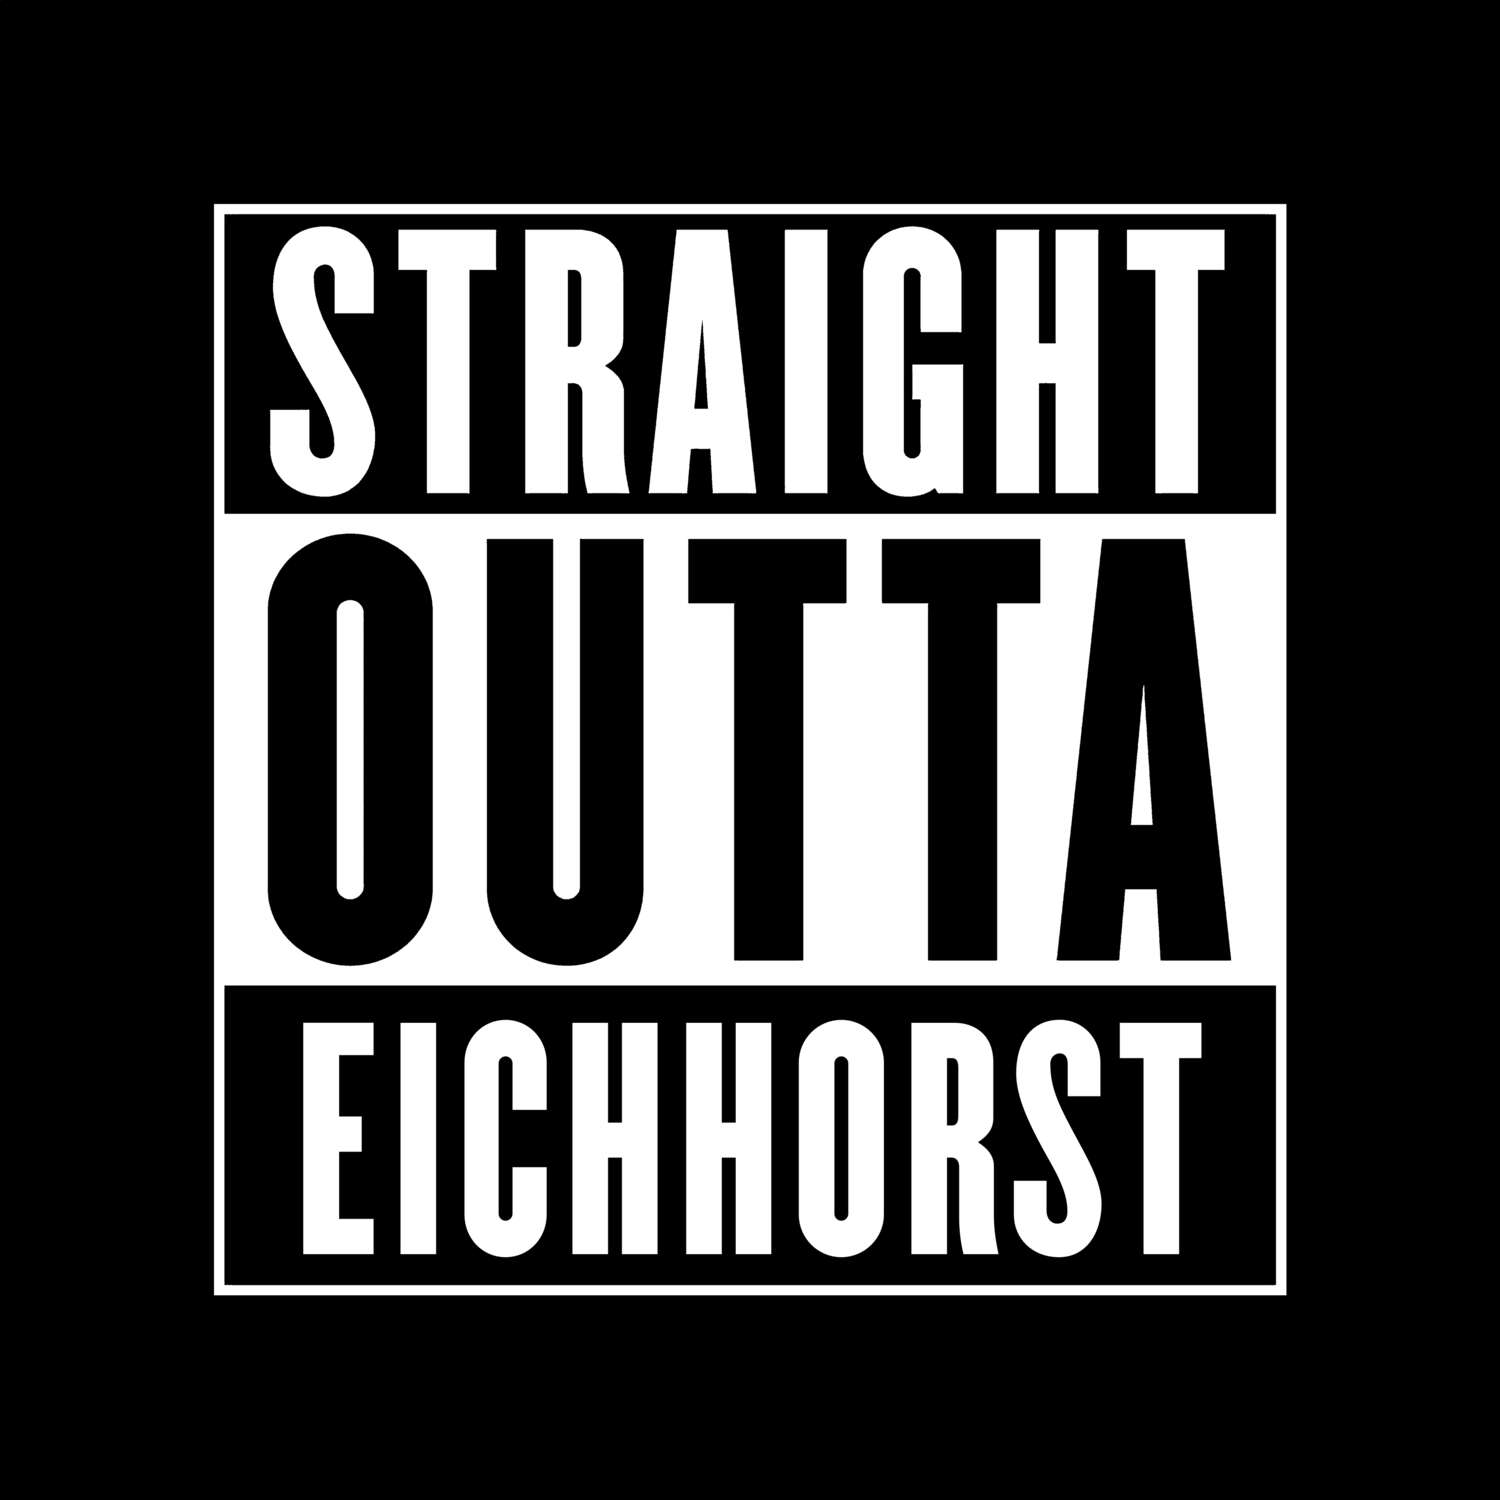 Eichhorst T-Shirt »Straight Outta«